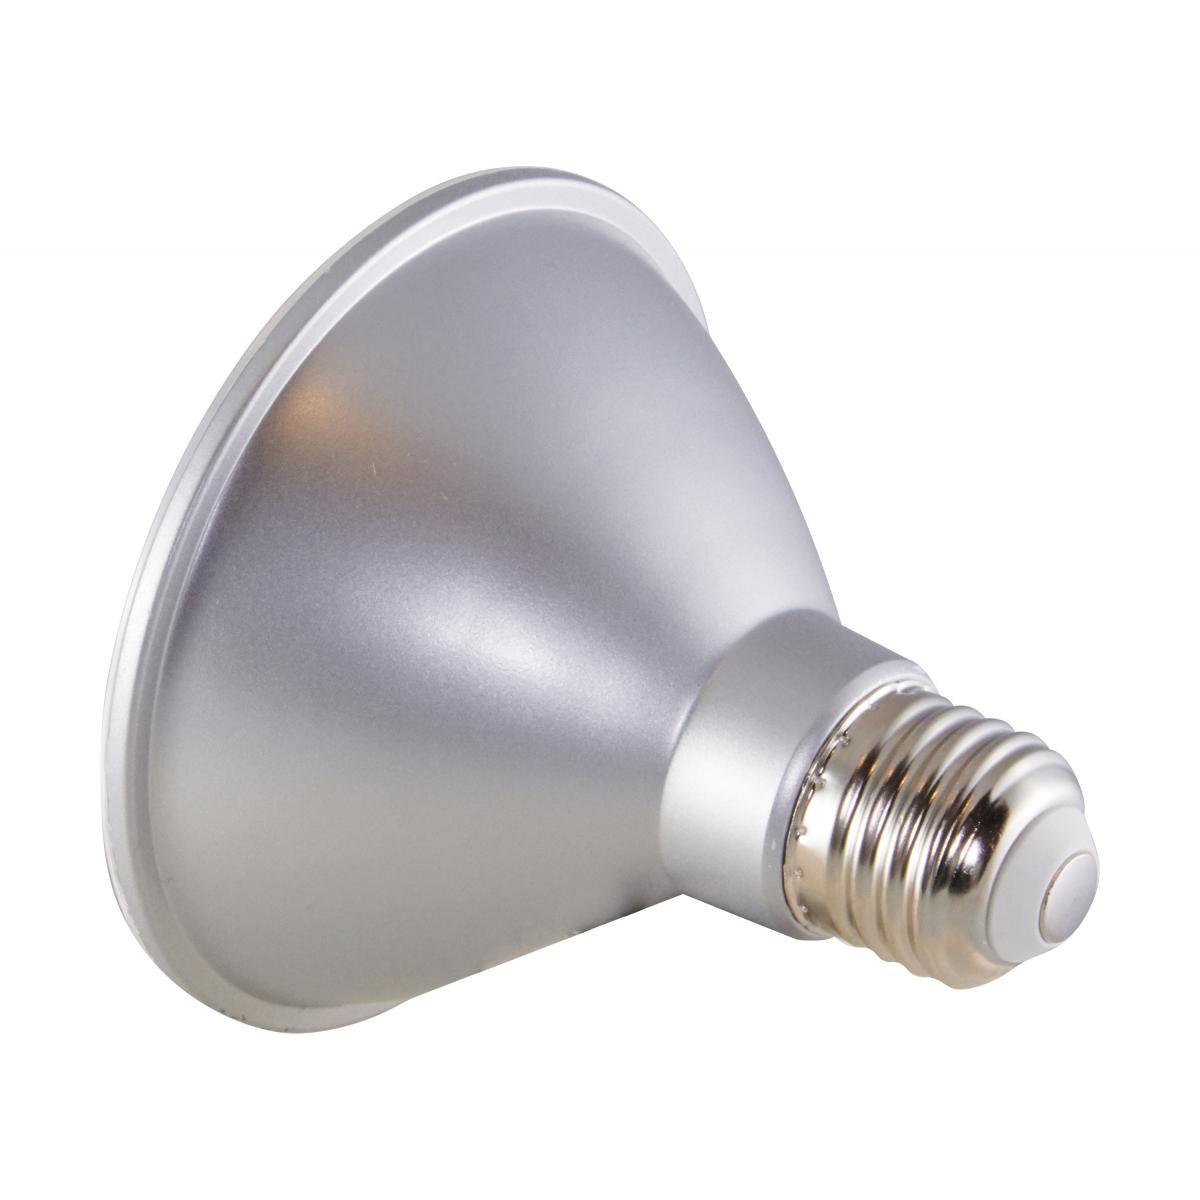 PAR30 Short Neck Reflector LED Bulb, 12 watt, 1000 Lumens, 2700K, E26 Medium Base, 40 Deg. Flood - Bees Lighting